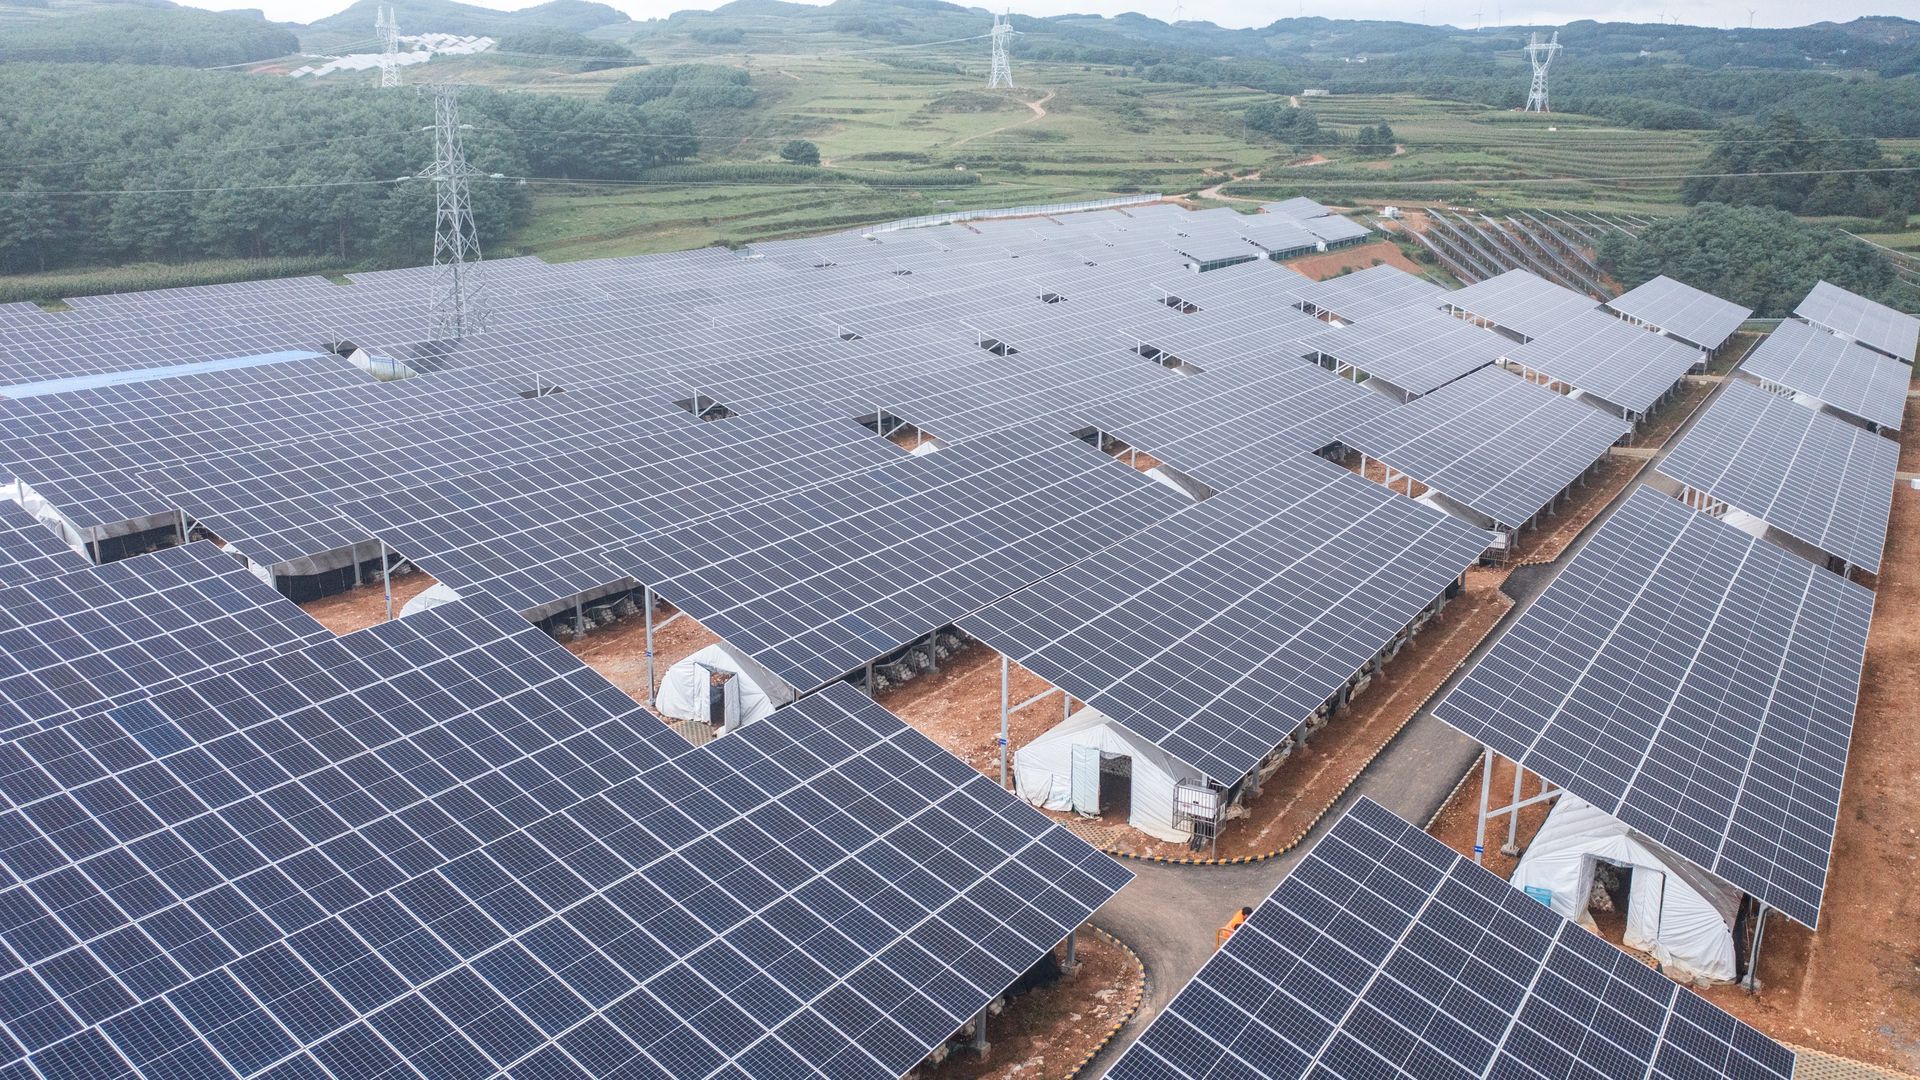 Photo of a row of solar panels on farmland